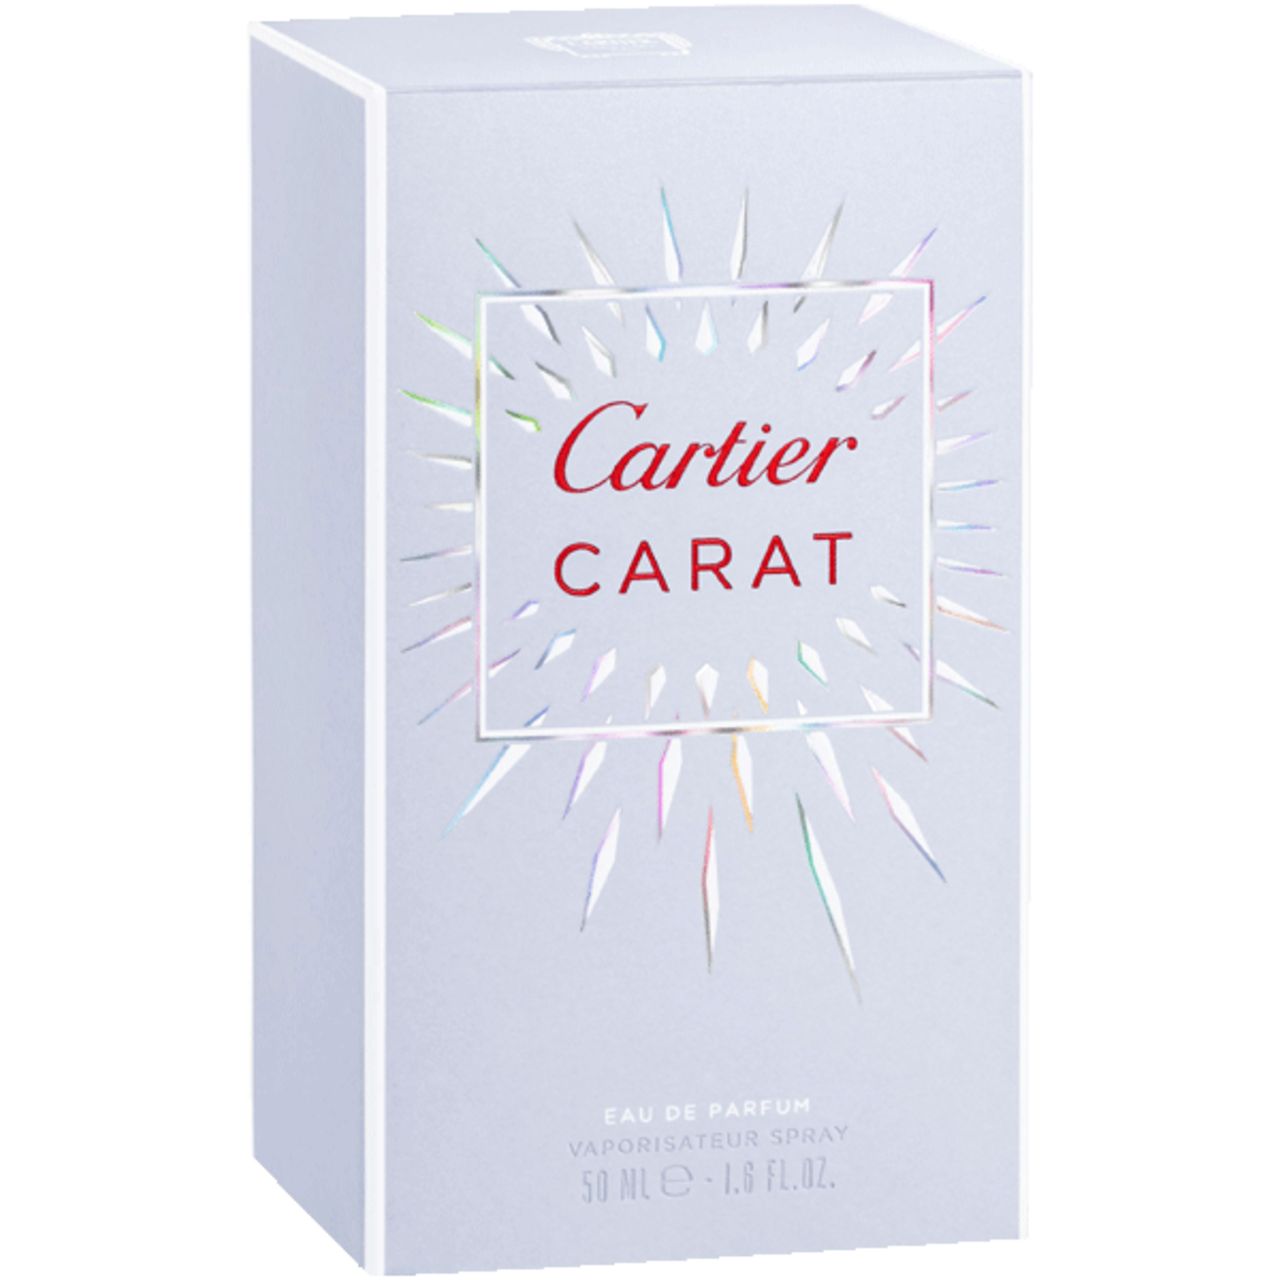 Cartier, Cartier Carat EDP